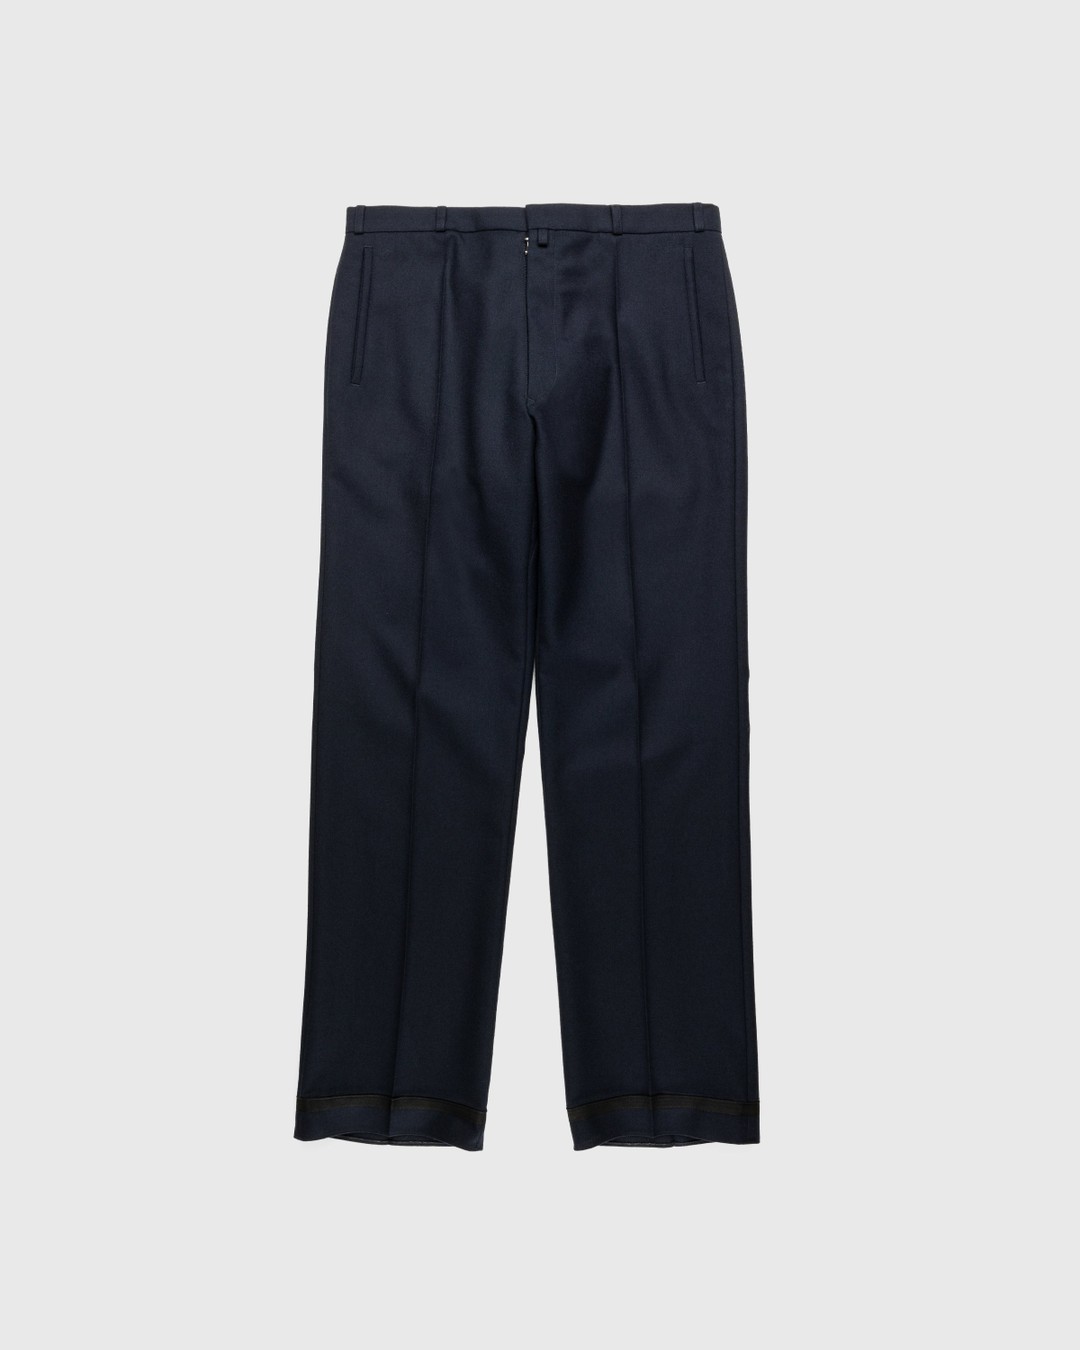 Maison Margiela – Wool Twill Trousers Navy - Pants - Blue - Image 1